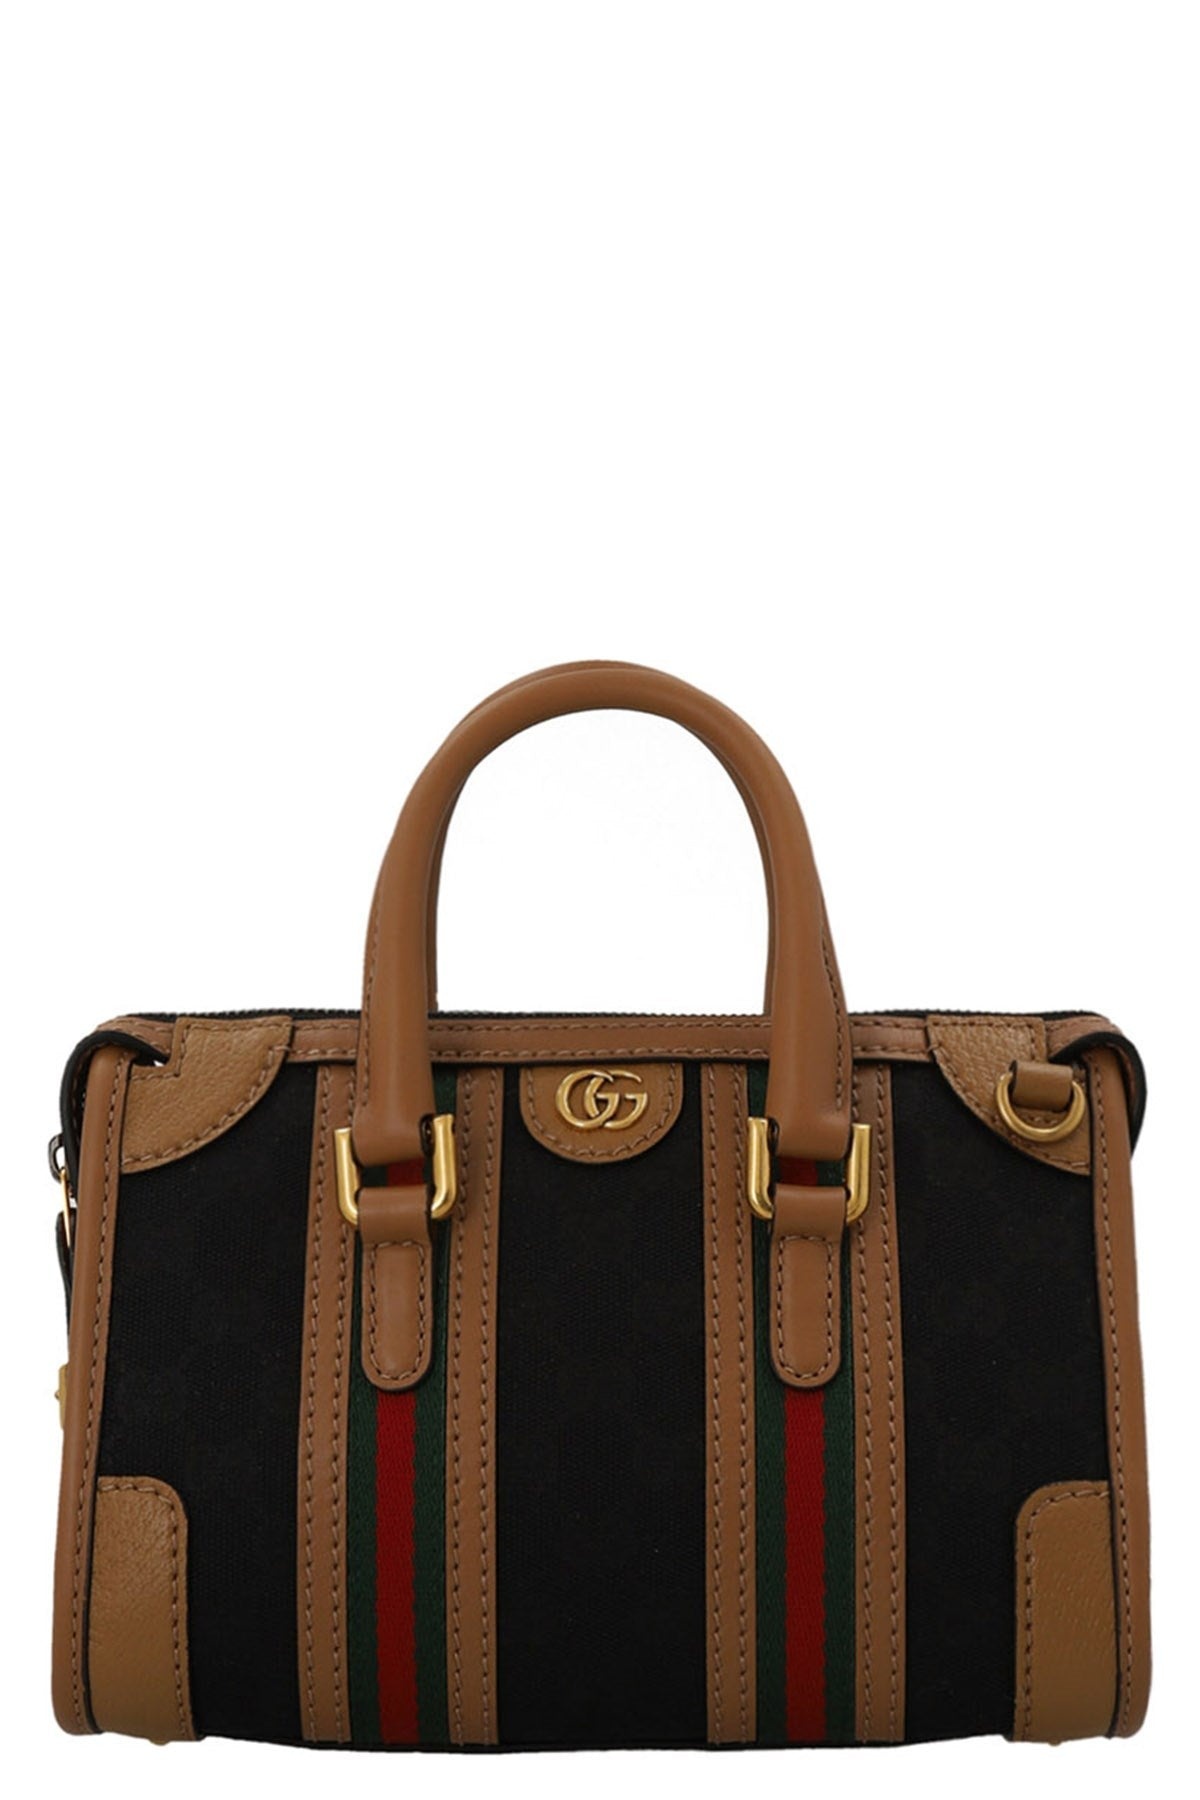 Gucci Women 'Original Gg' Mini Handbag - 1